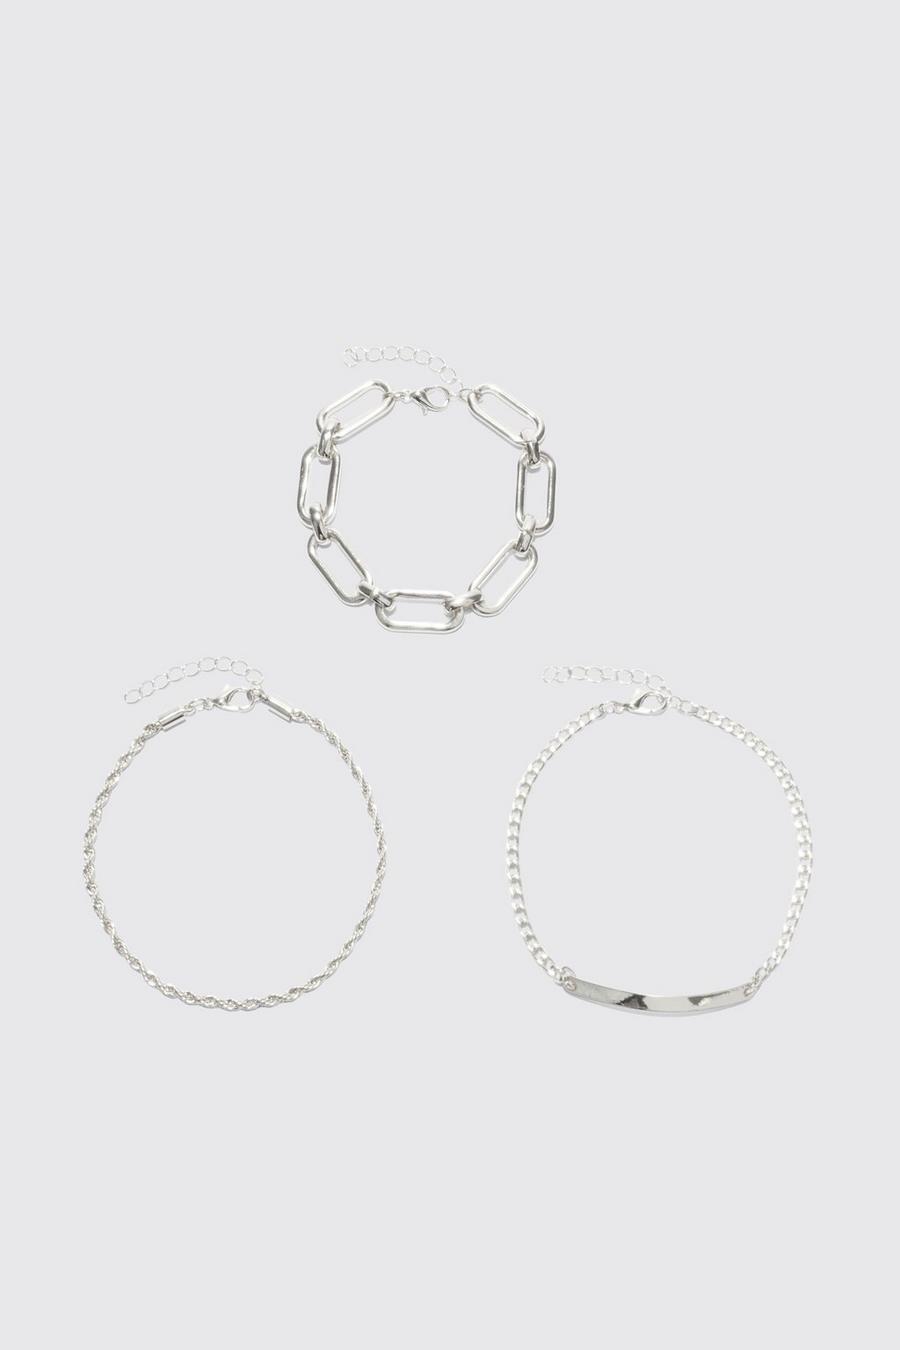 Silver argent Chunky Chain Bracelet Set